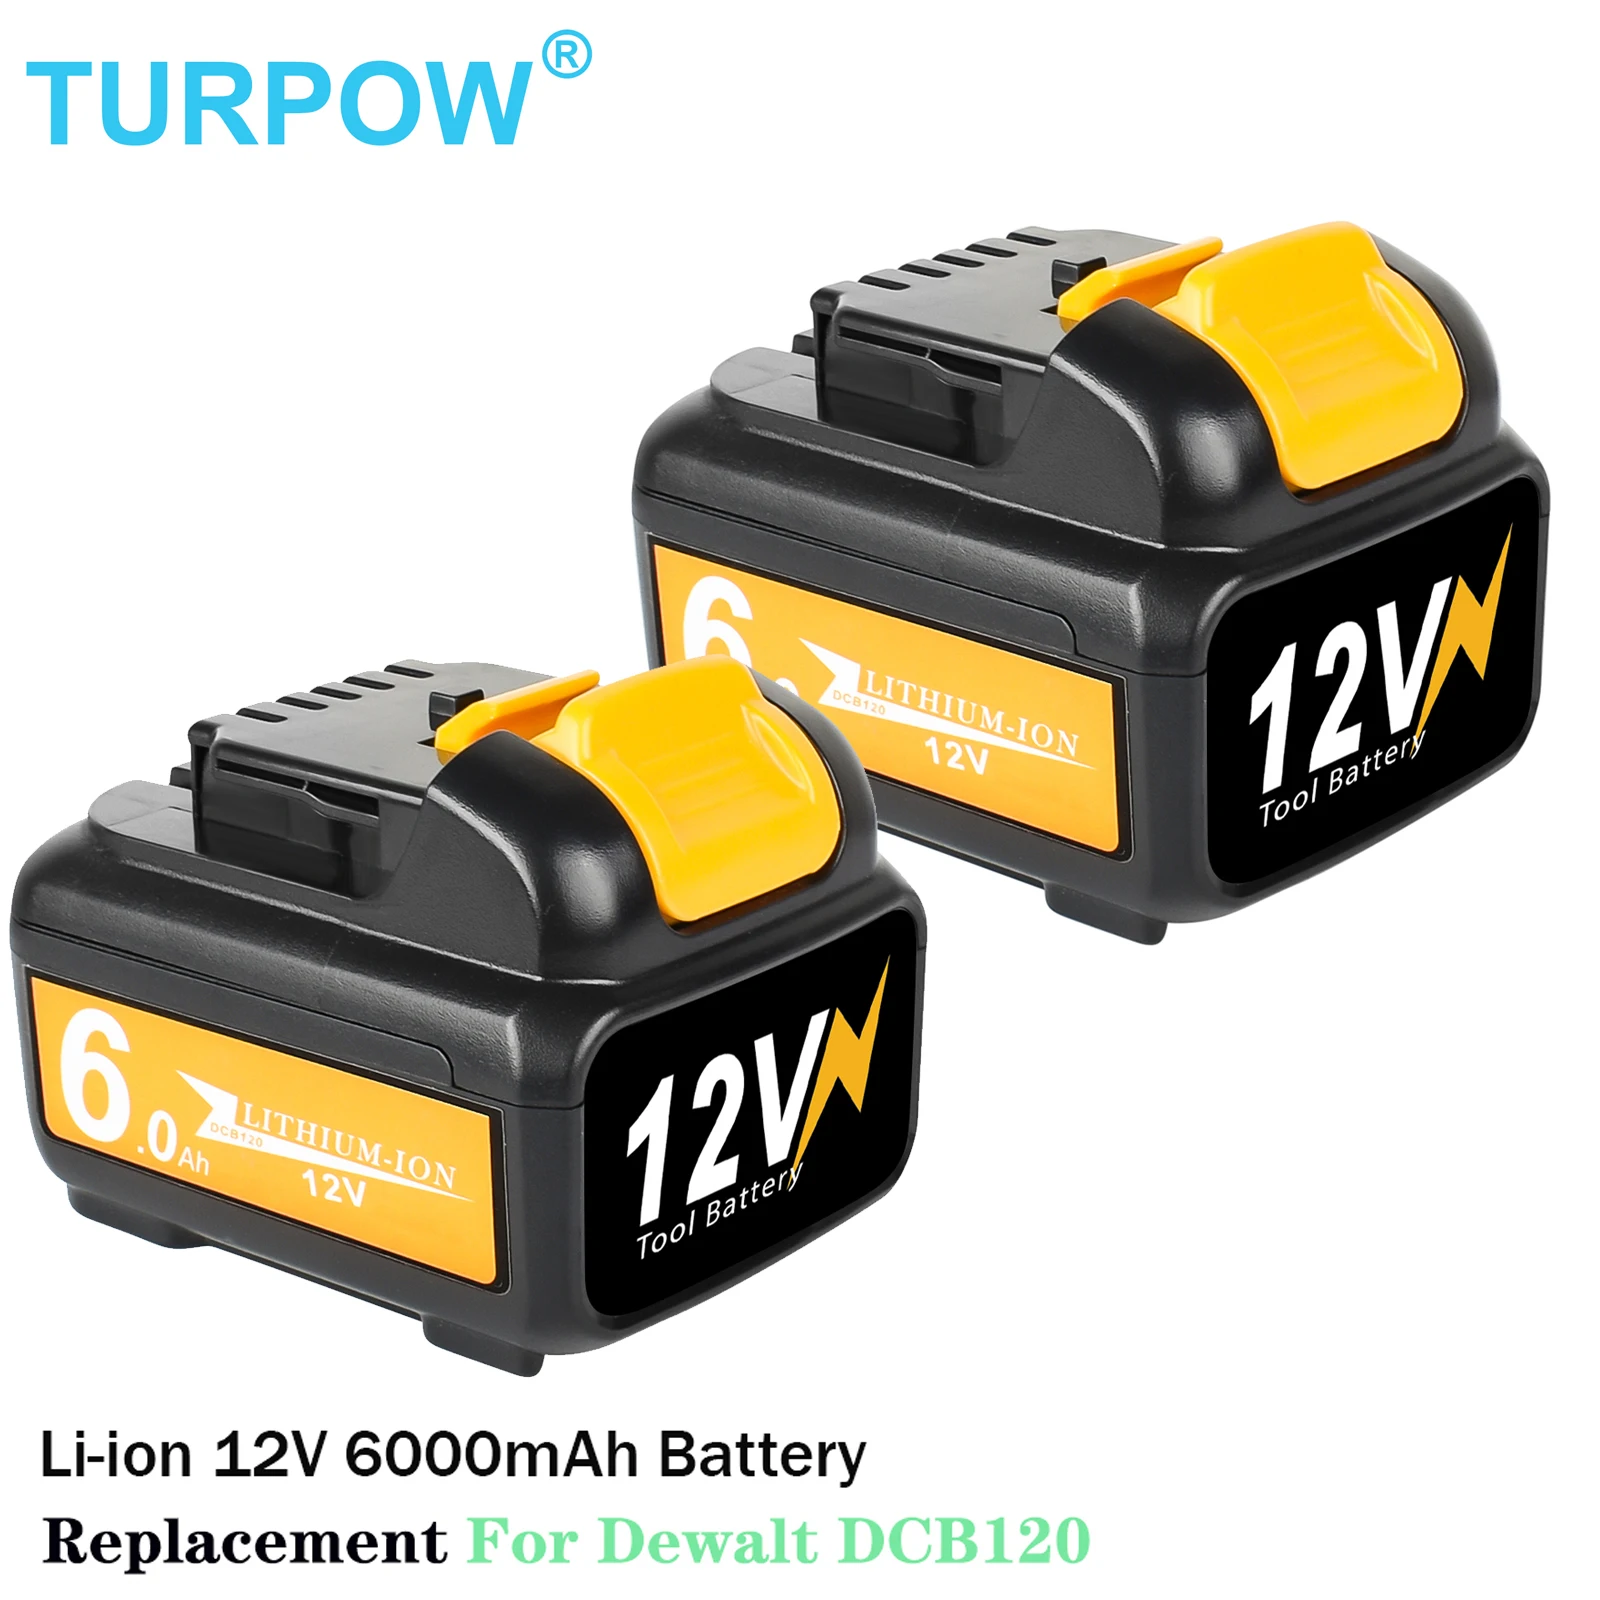 

12V 6000mAh Li-ion Battery Rechargeable For Dewalt DCB124 DCB120 DCB127 DCB121 DCB127 DCB121 DCB100 DCB101 DCB119 Tools Battery